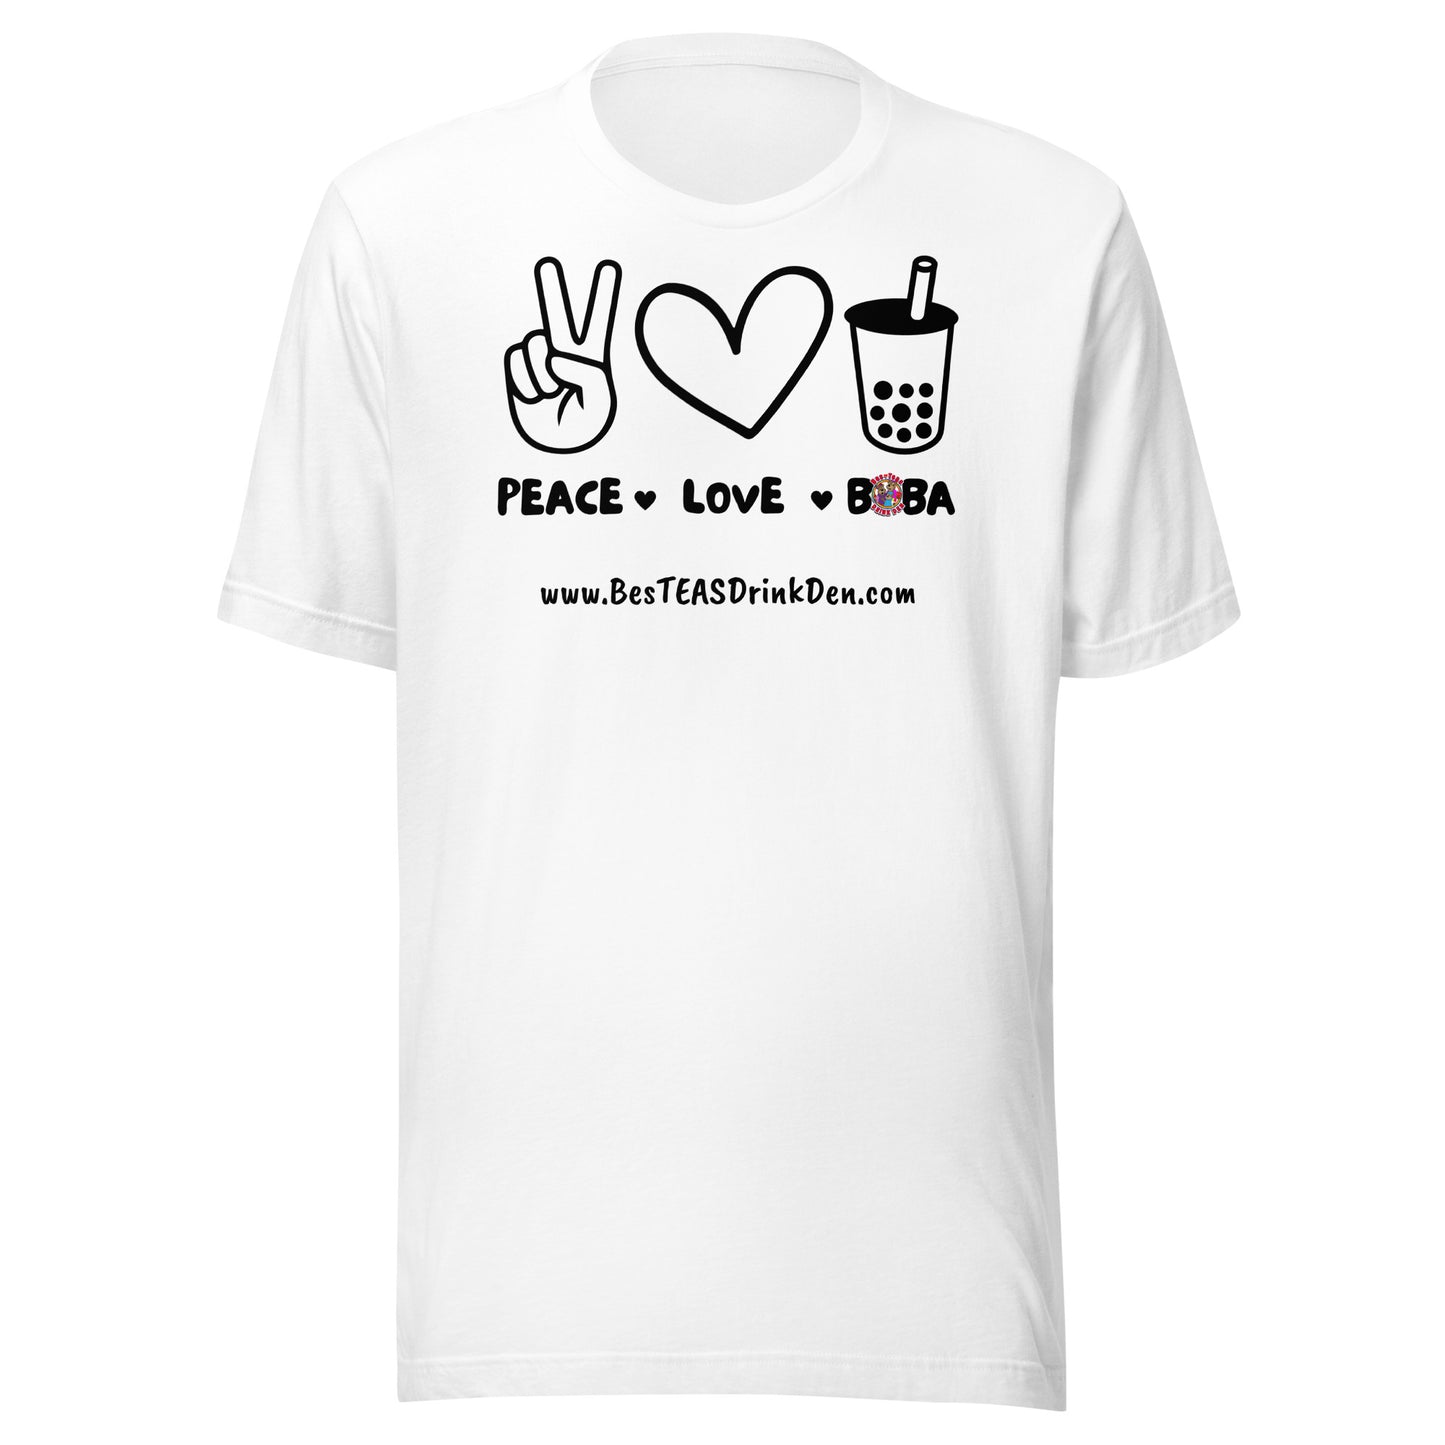 "PEACE, LOVE, BOBA" T Shirt